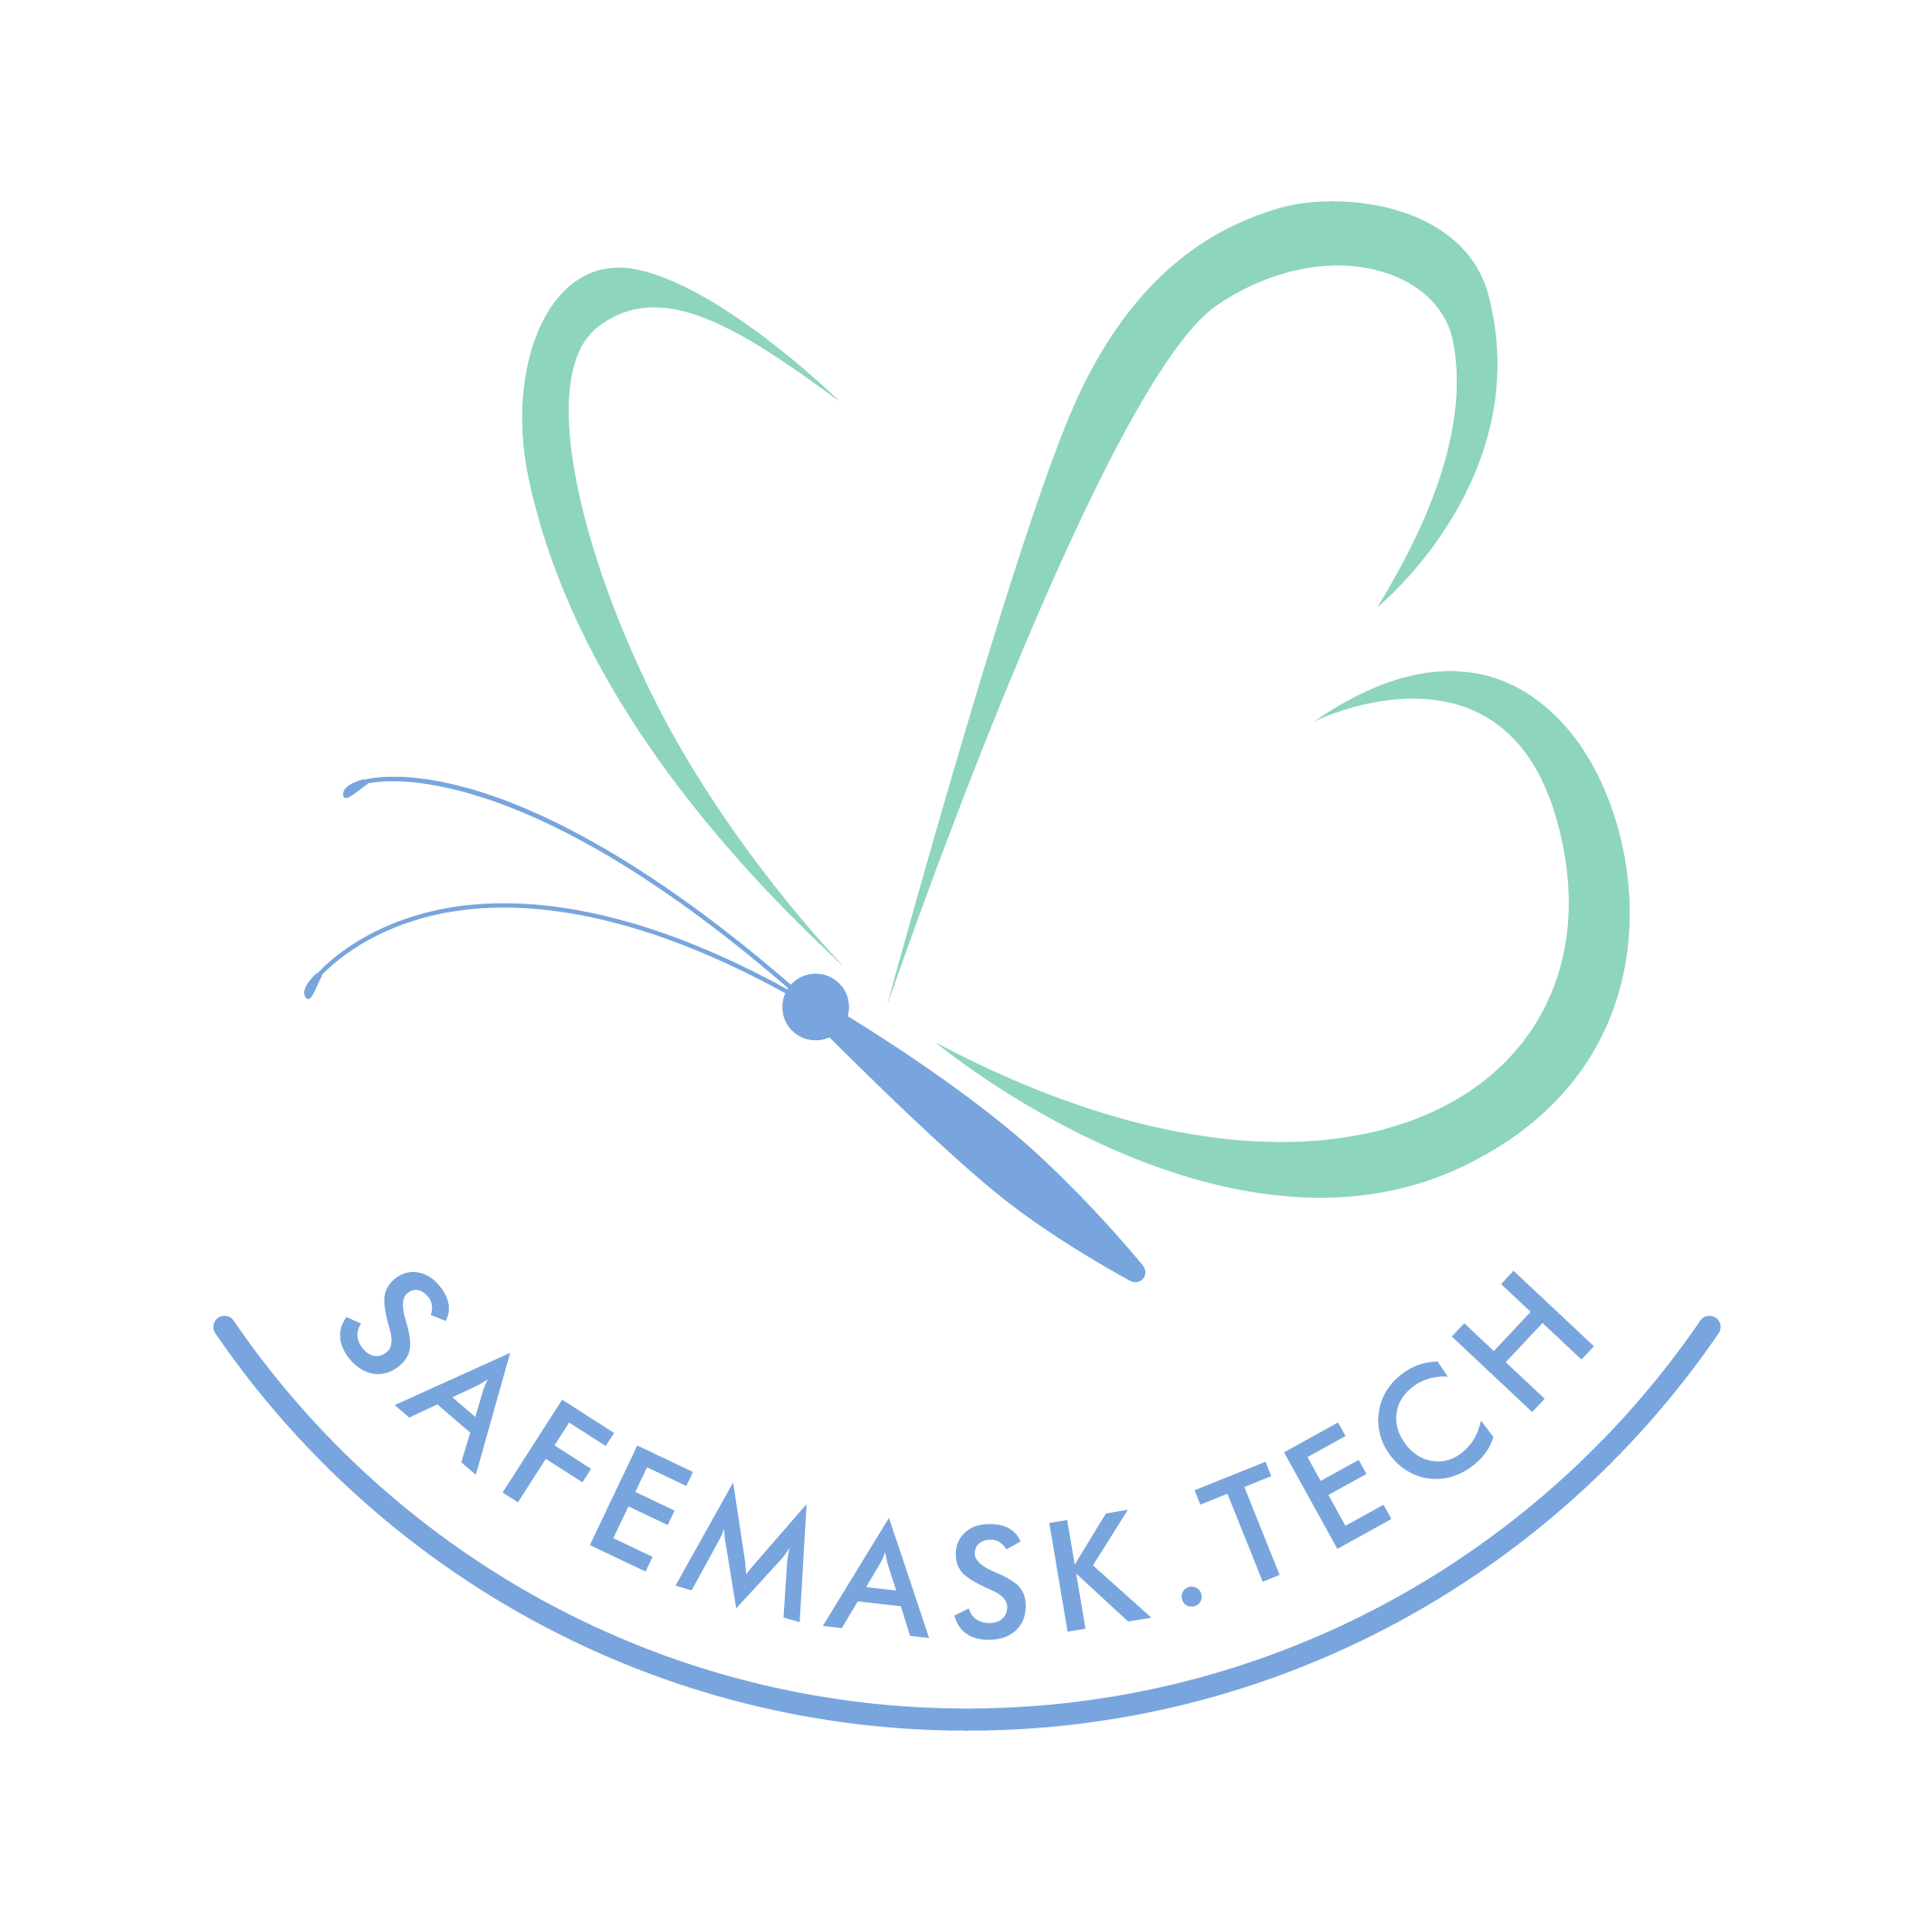 SafeMask.Tech™